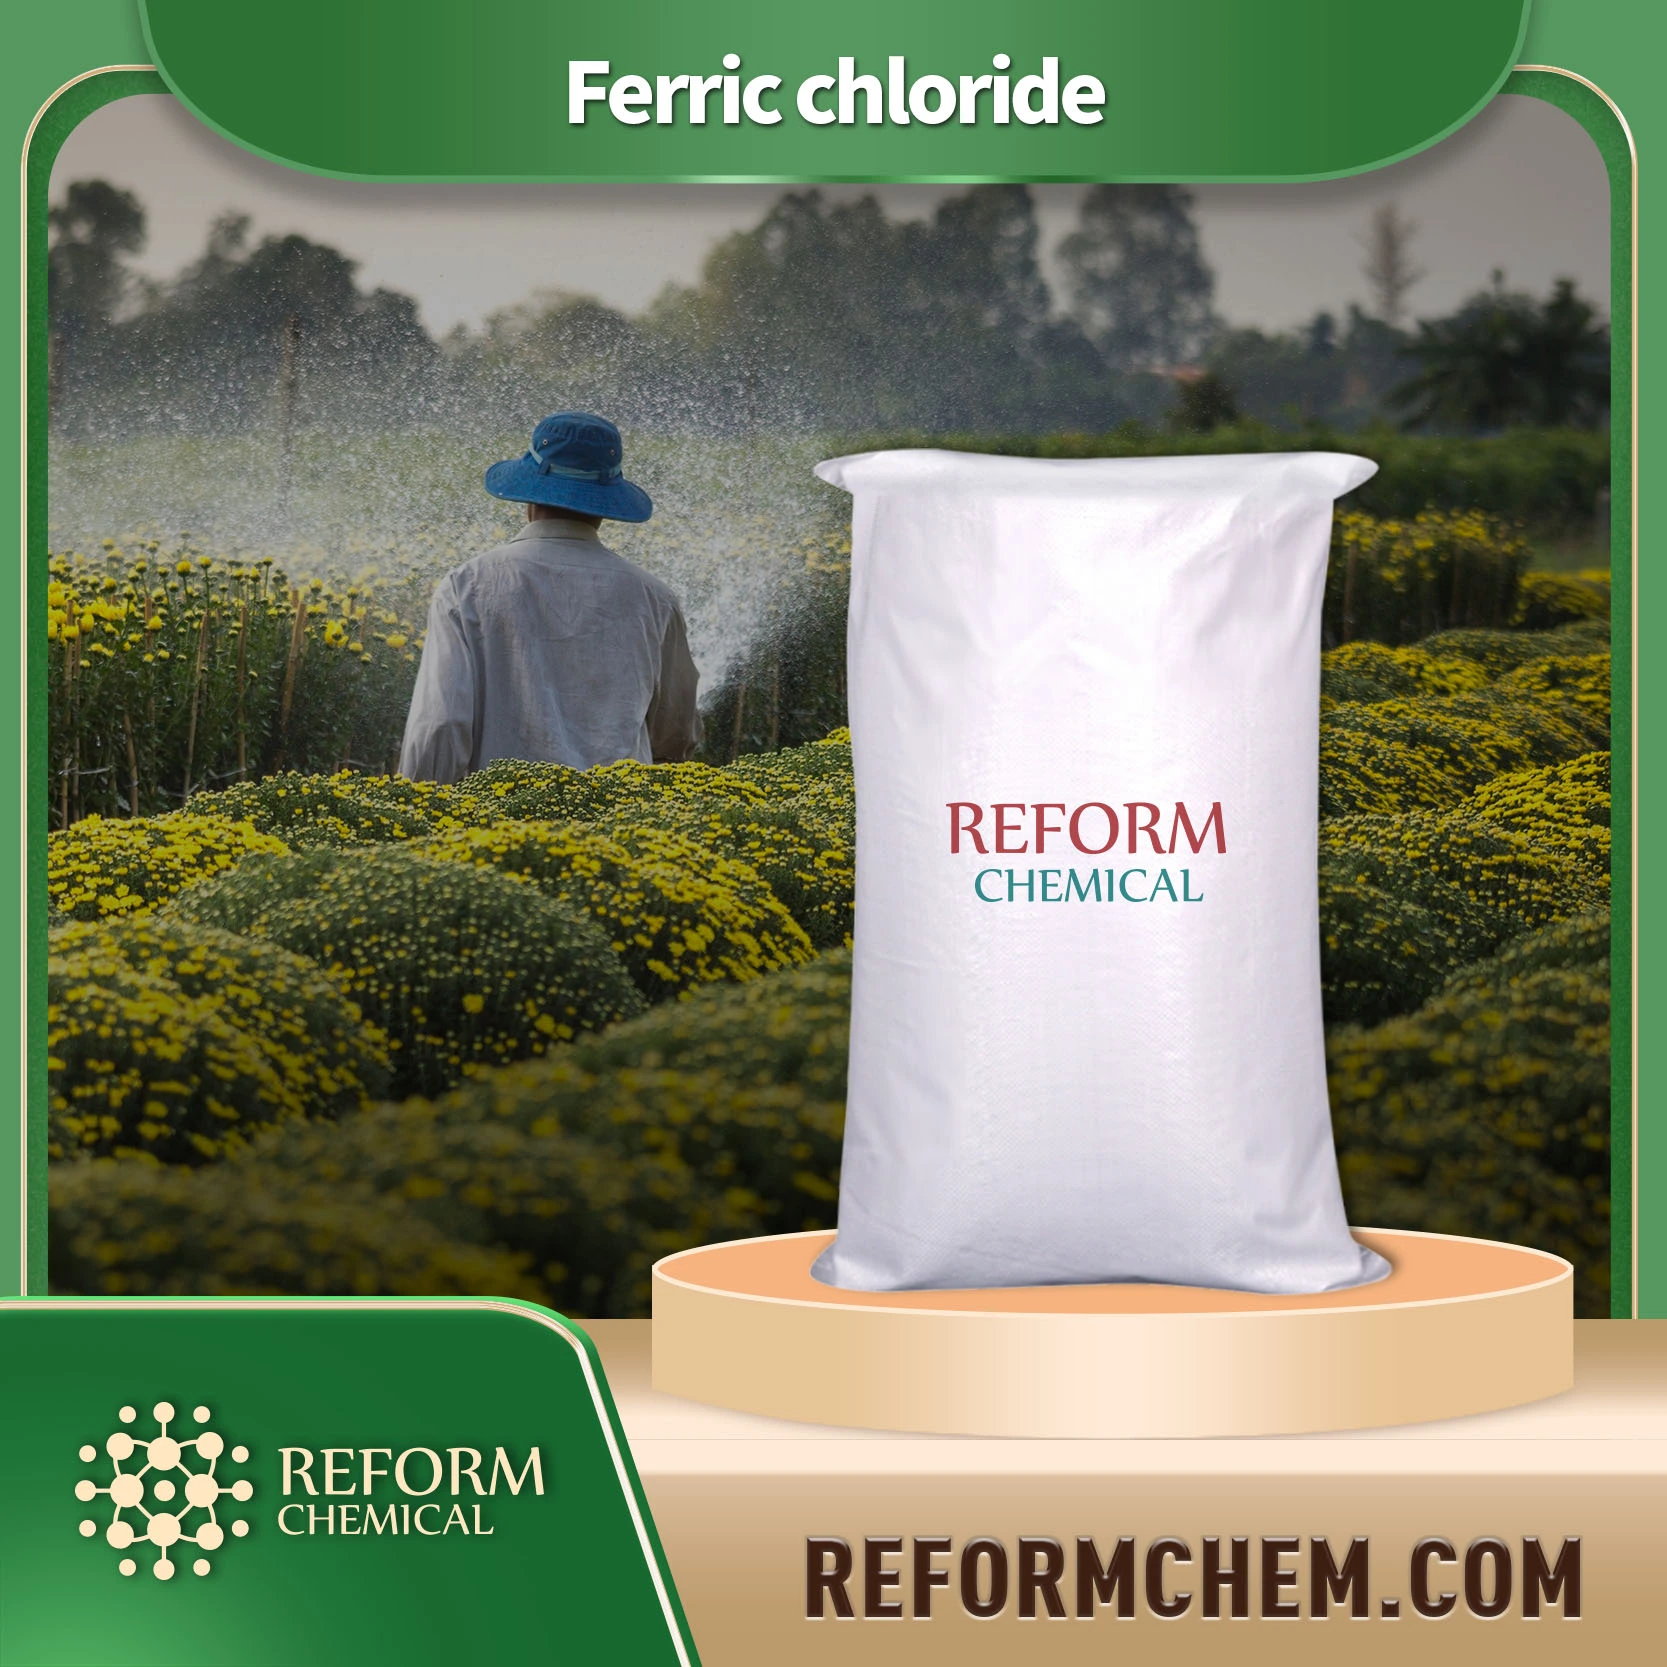 ferric chloride7705 08 0